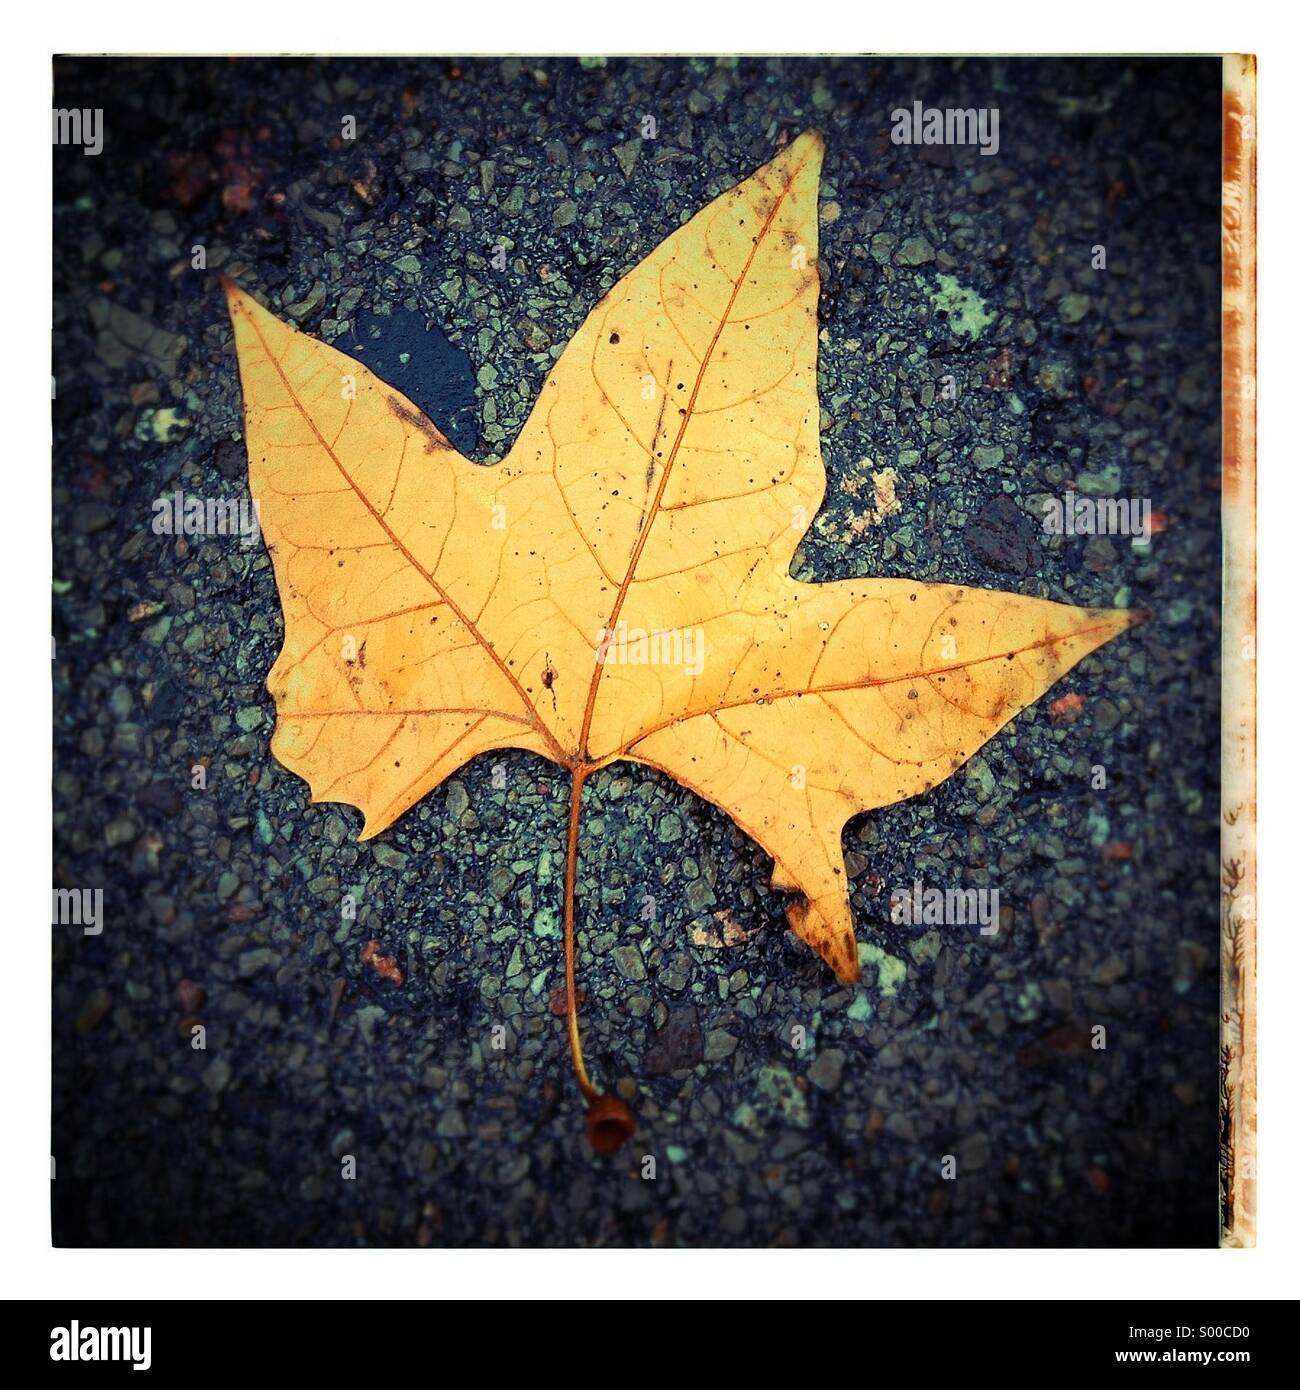 Single fallen autumn leaf on a sidewalk pavement in a city Stock Photo